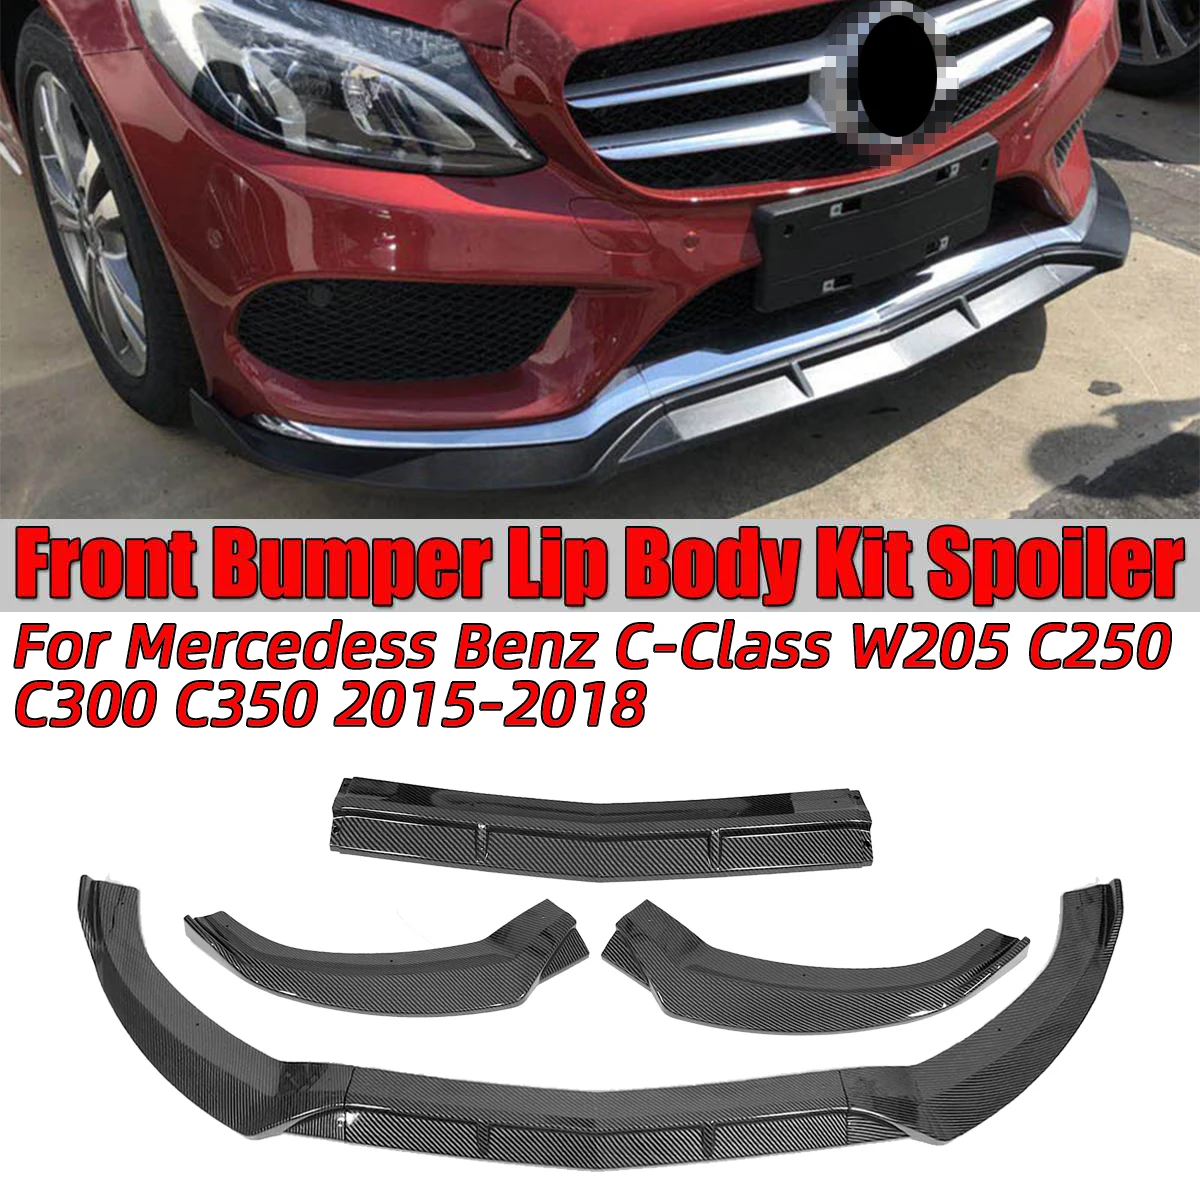 Kit de labio delantero para coche Mercedes Benz, juego de parachoques de automóvil modelo Clase C W205 C250 C300 C350 2015-2018, 3 unidades